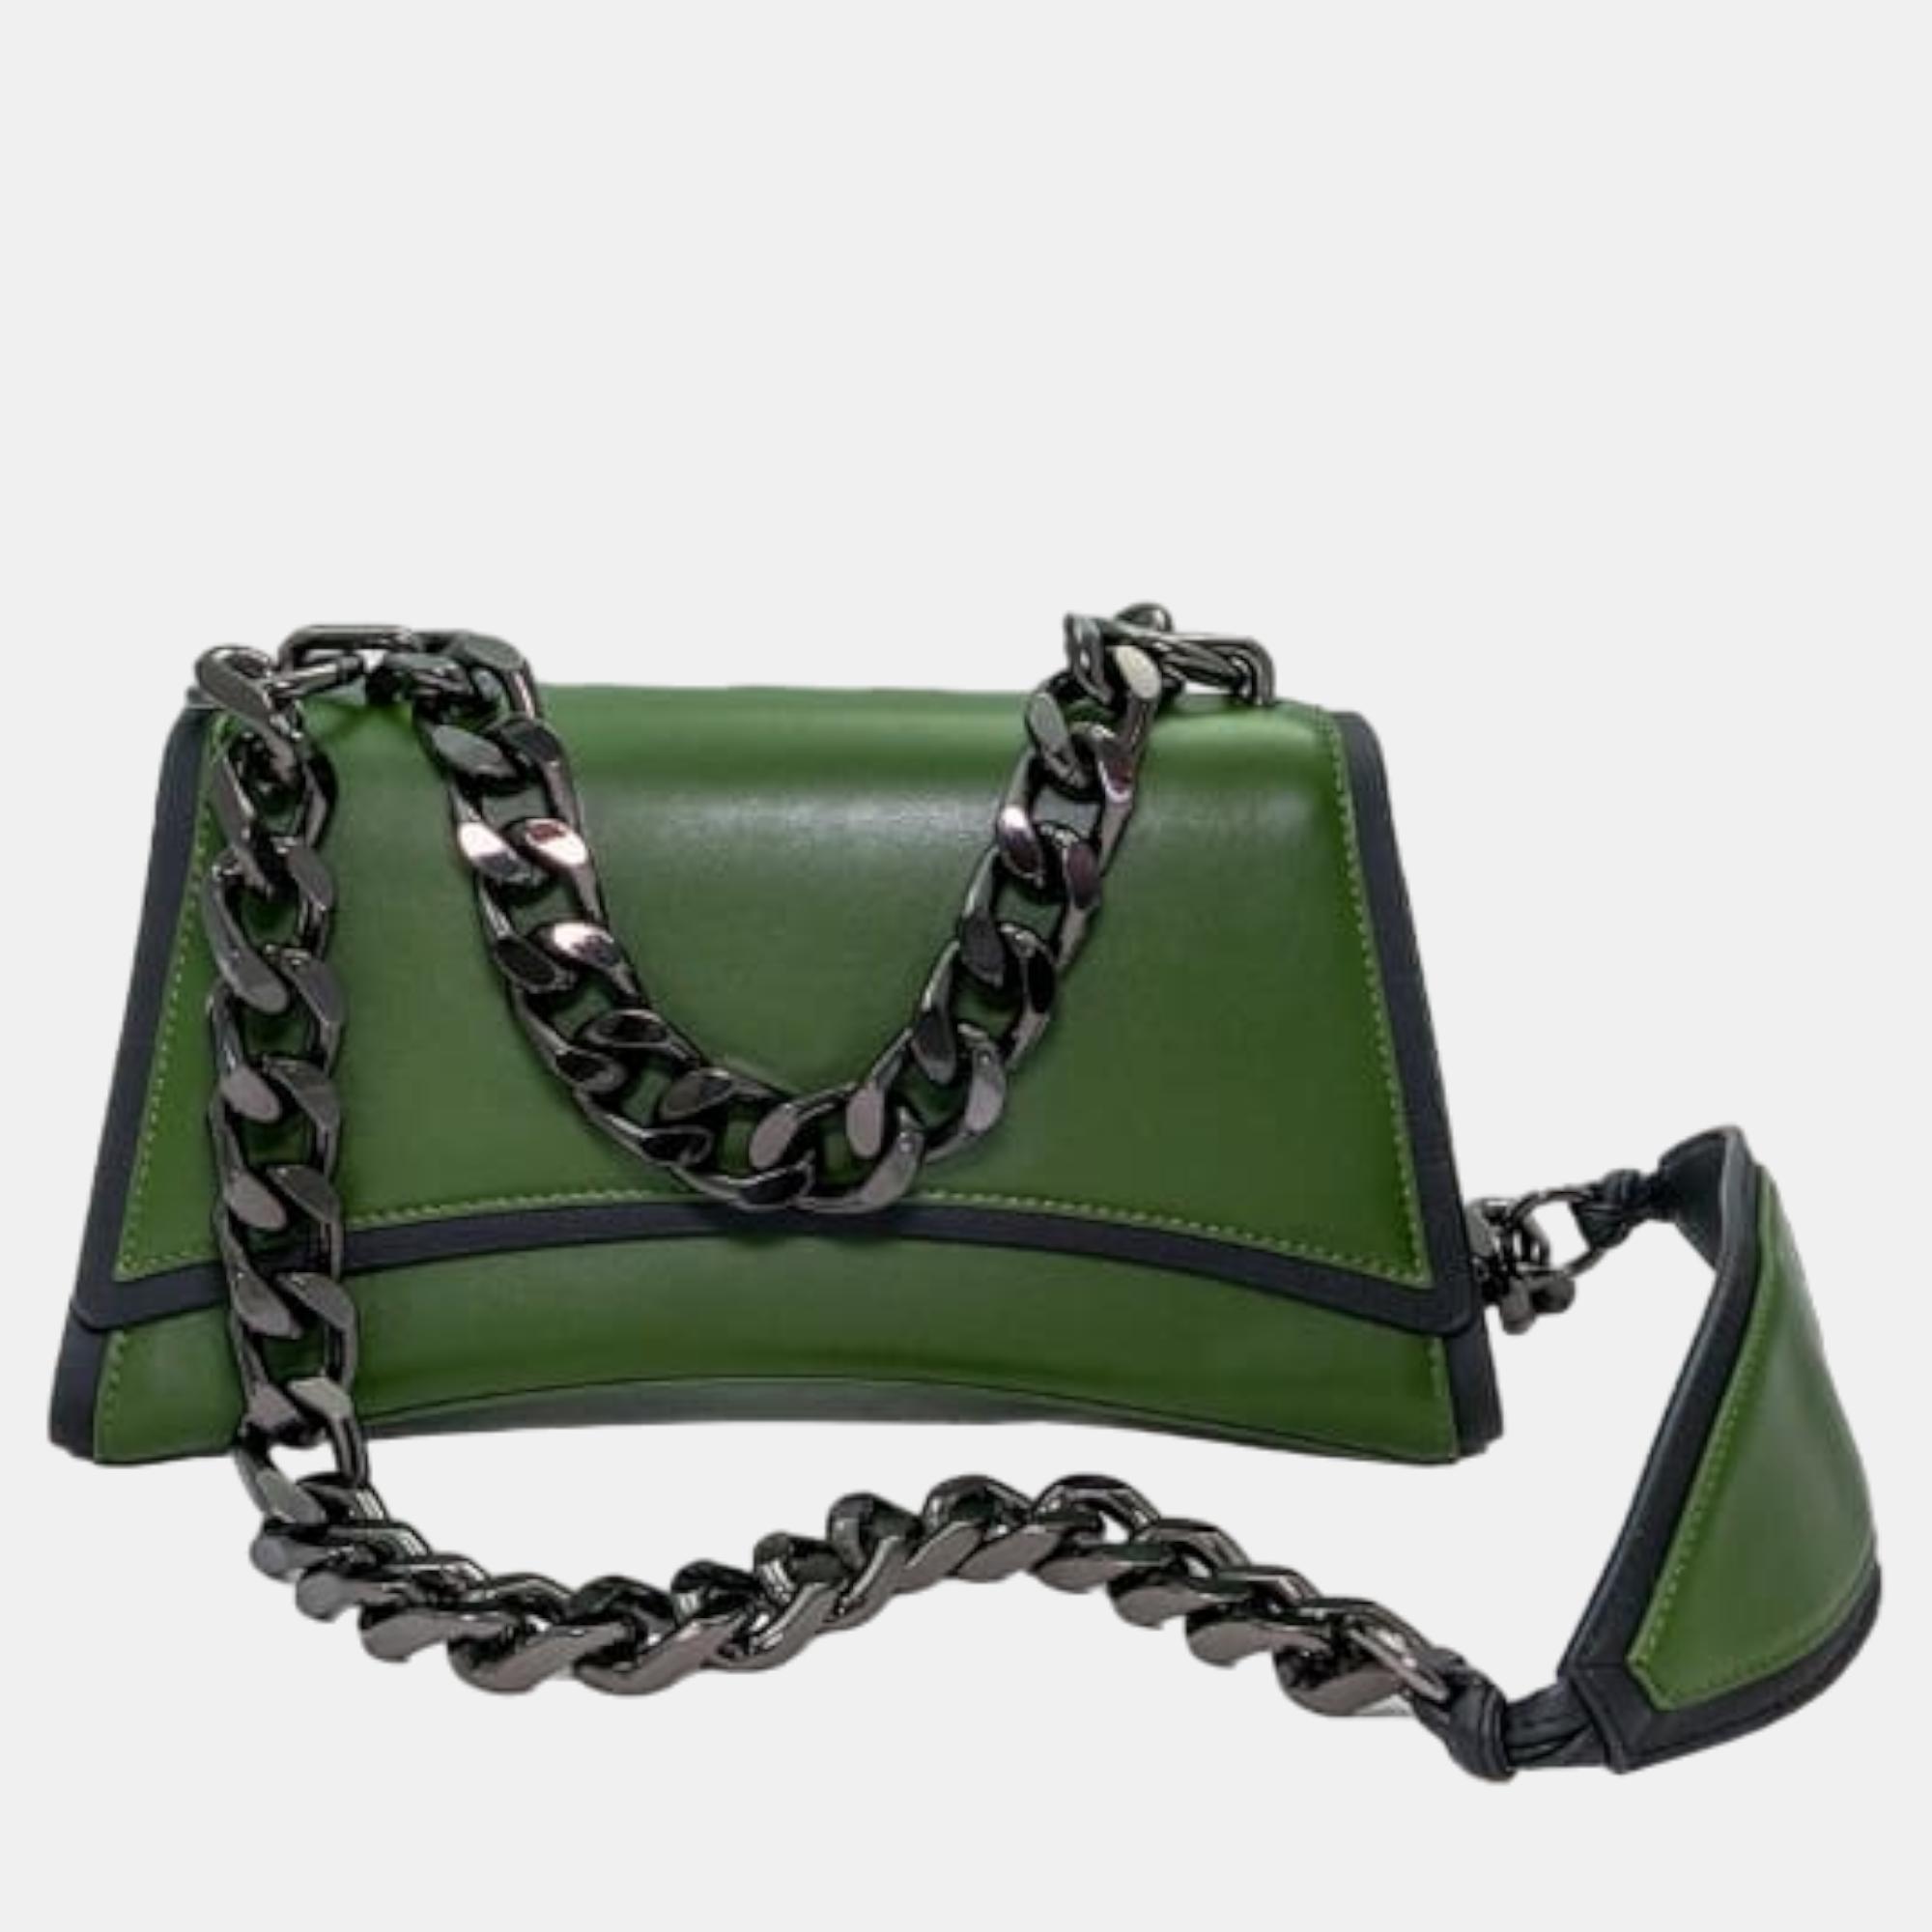 Eslla Dharma Green W Black Trim Shoulder Bag